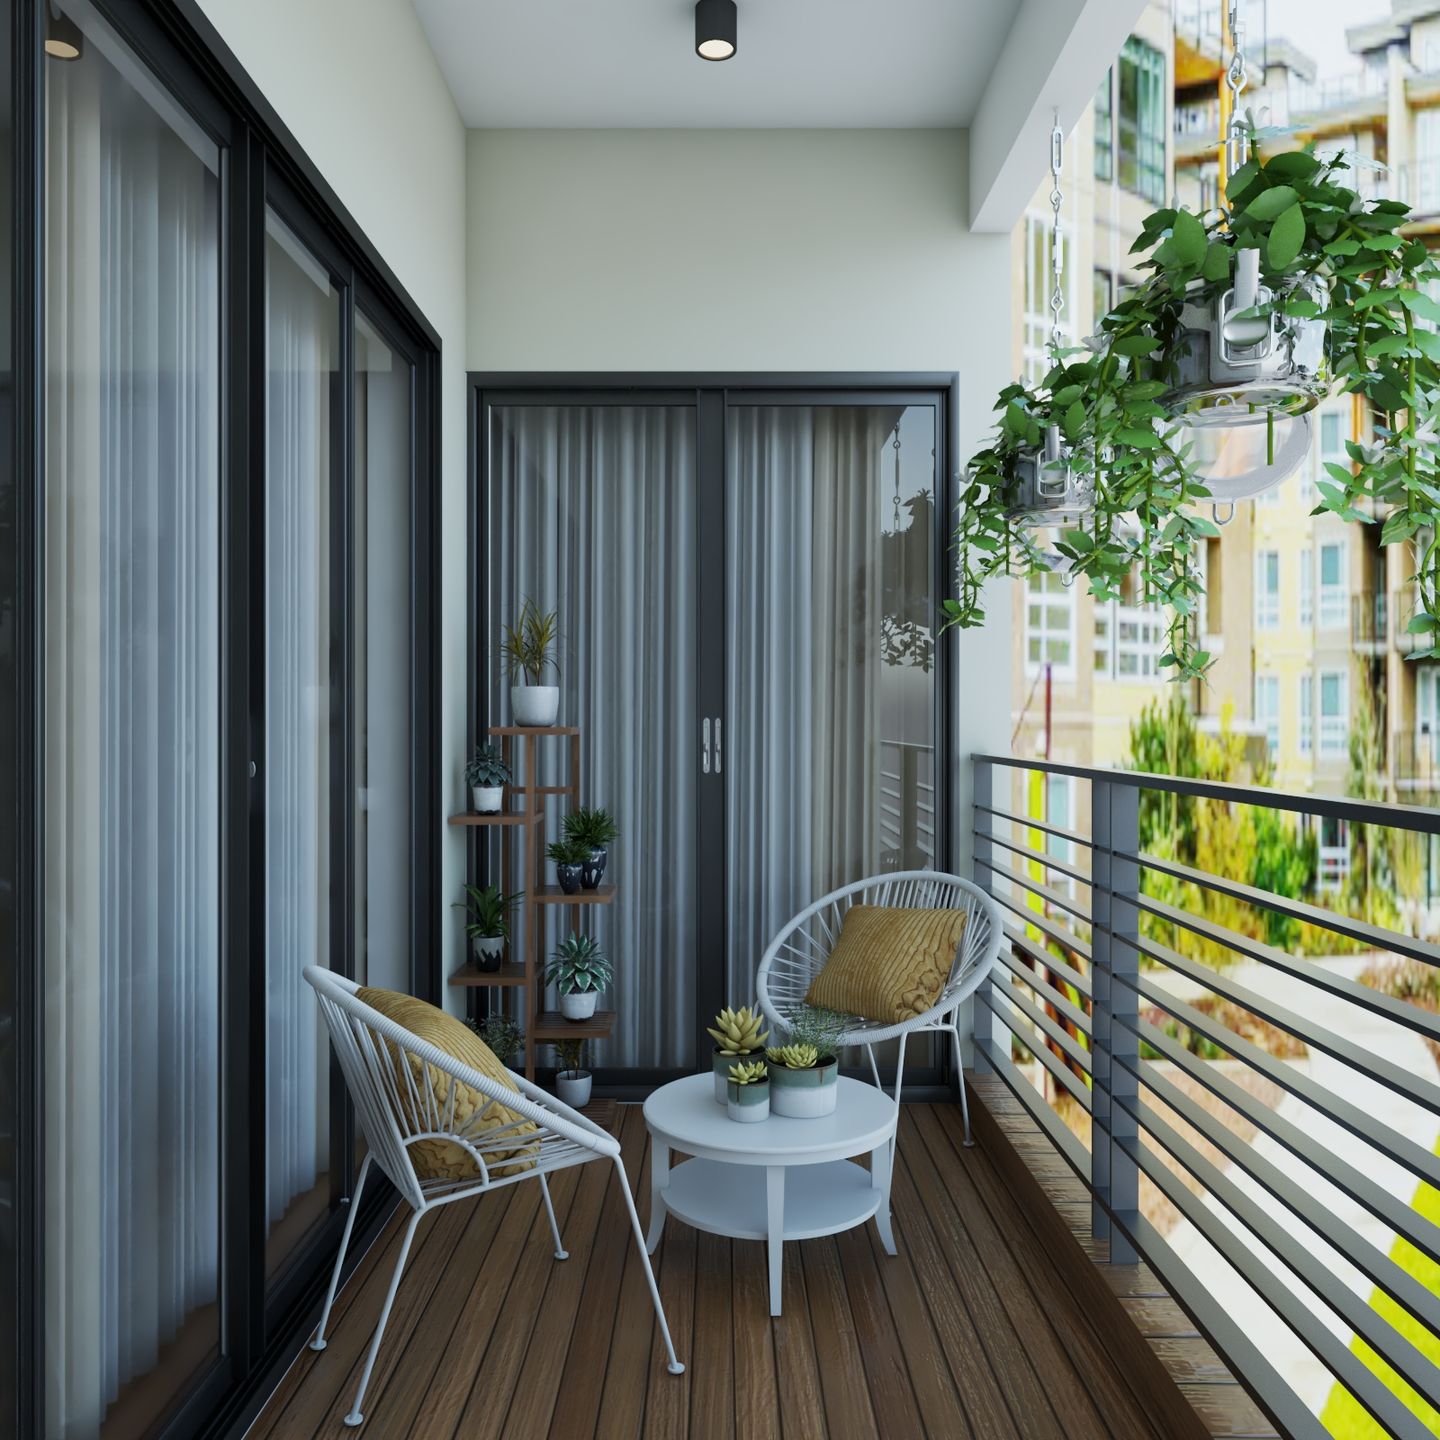 Balcony Design With Wooden Flooring  - Livspace